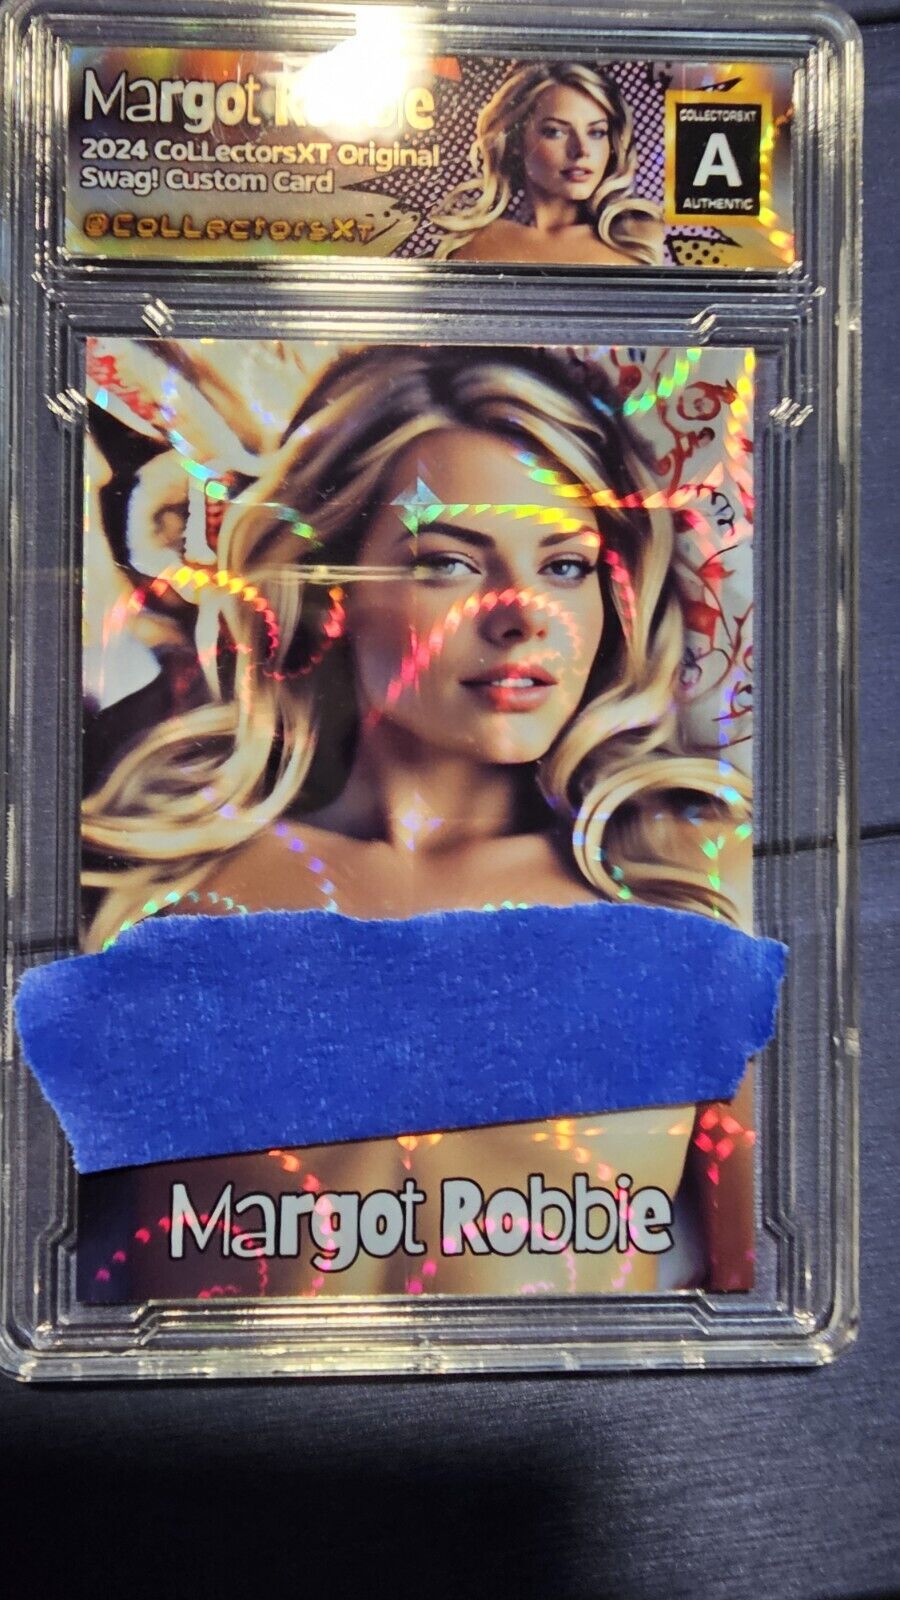 Margot Robbie Wolf Of Wallstreet Chrome Limited Edition Tribute Custom Card